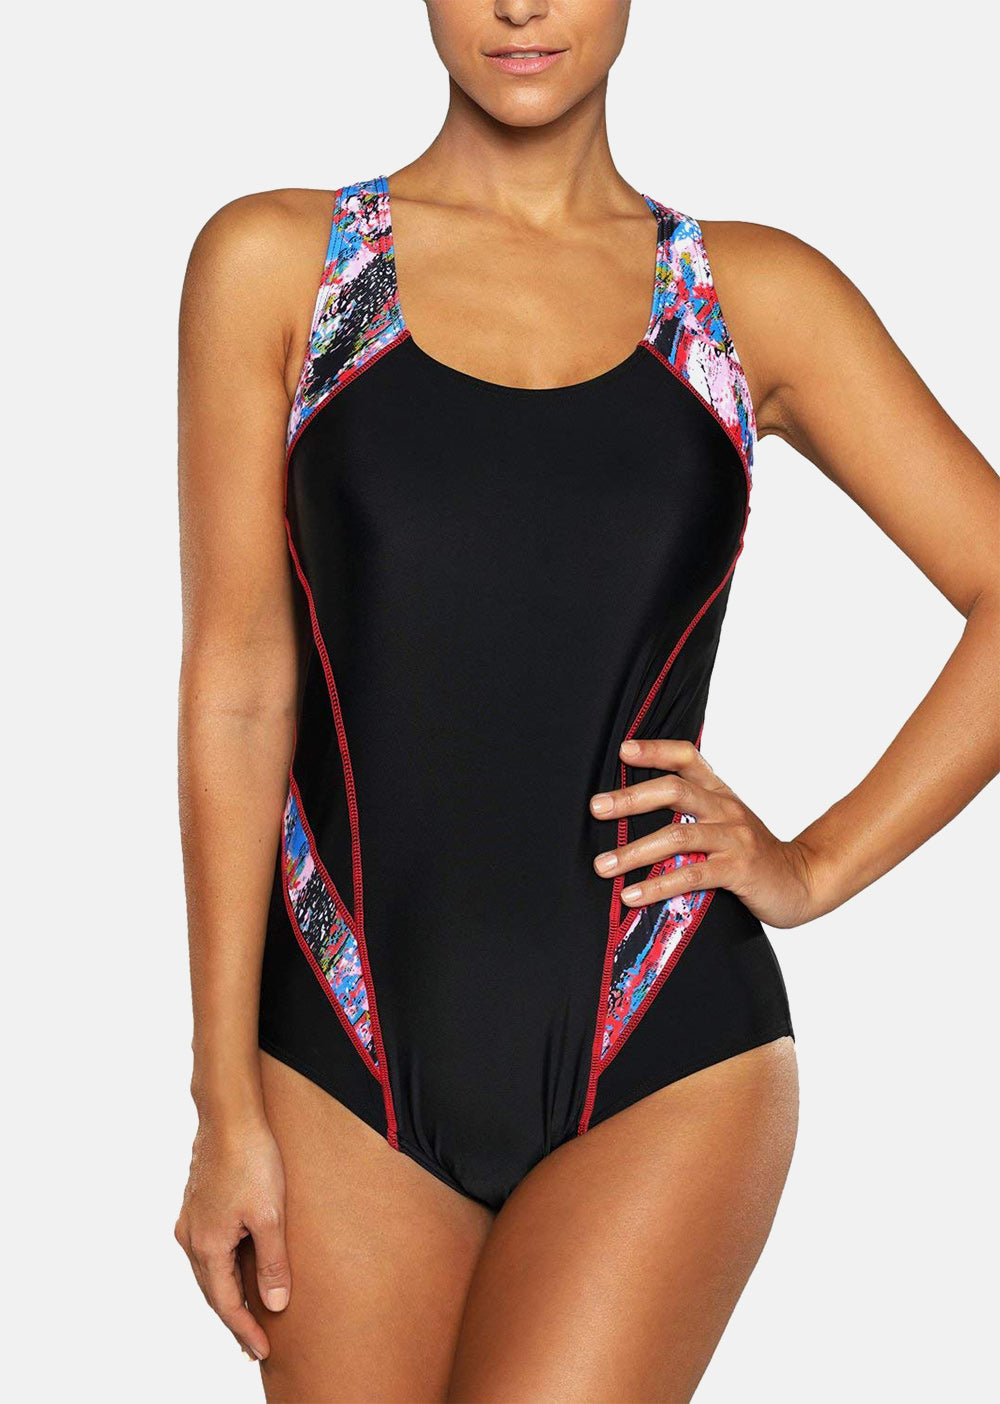 One Piece Pro Sports Swimwear Sports Swimsuit Colorblock Monokini Beach Wear Bathing Suit Bikini The Clothing Company Sydney